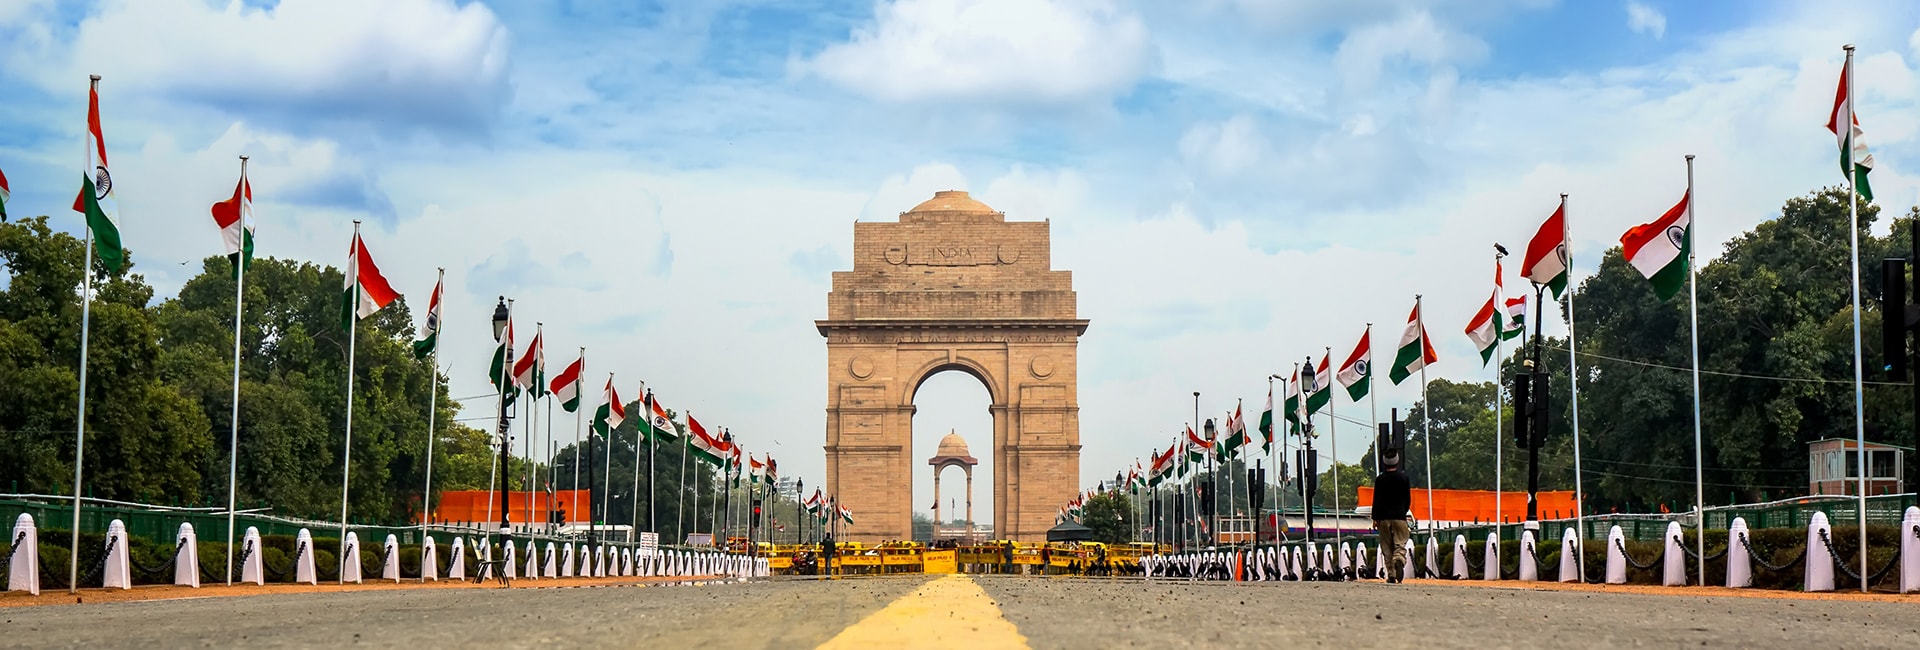 Delhi Sightseeing Tours